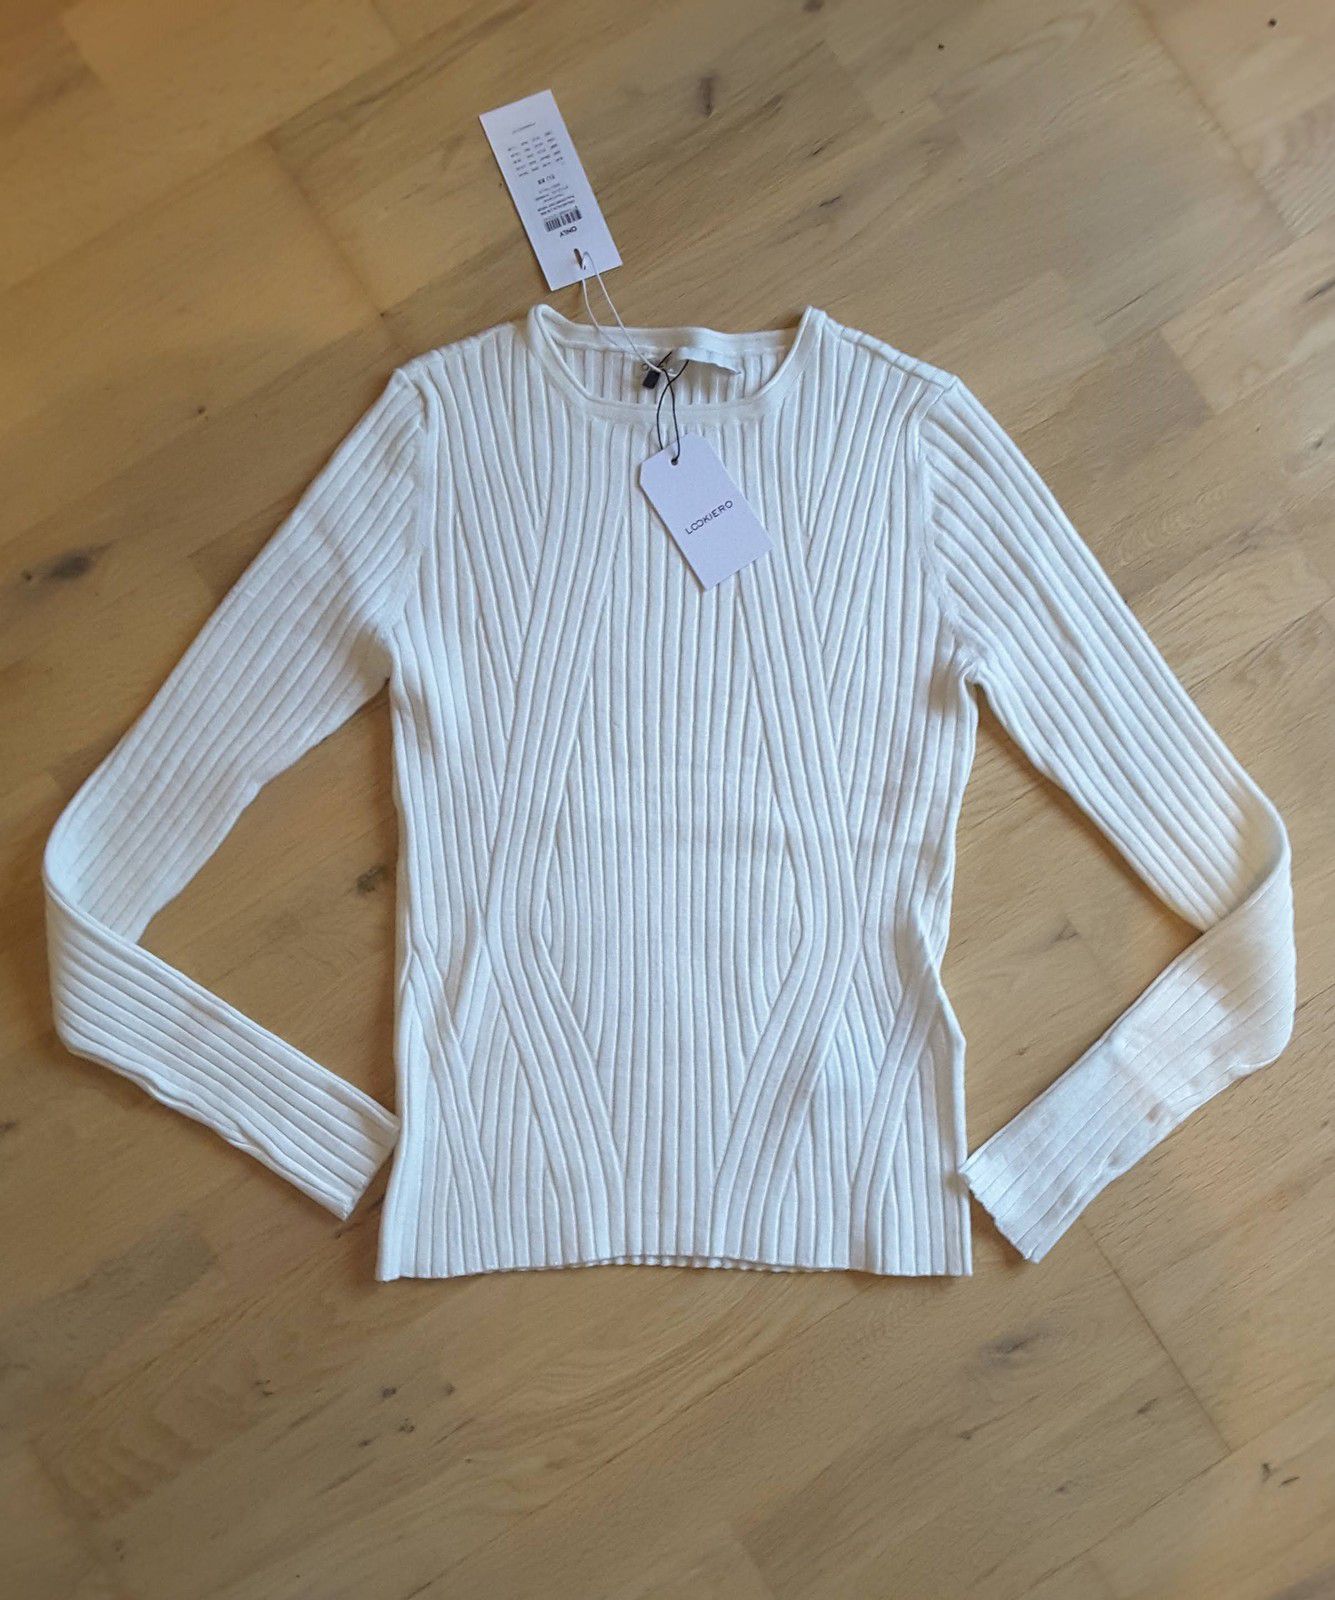 Onlnatalia Sweater Noos white - Only lookiero missbonsplansdunet personal shopper box vêtement